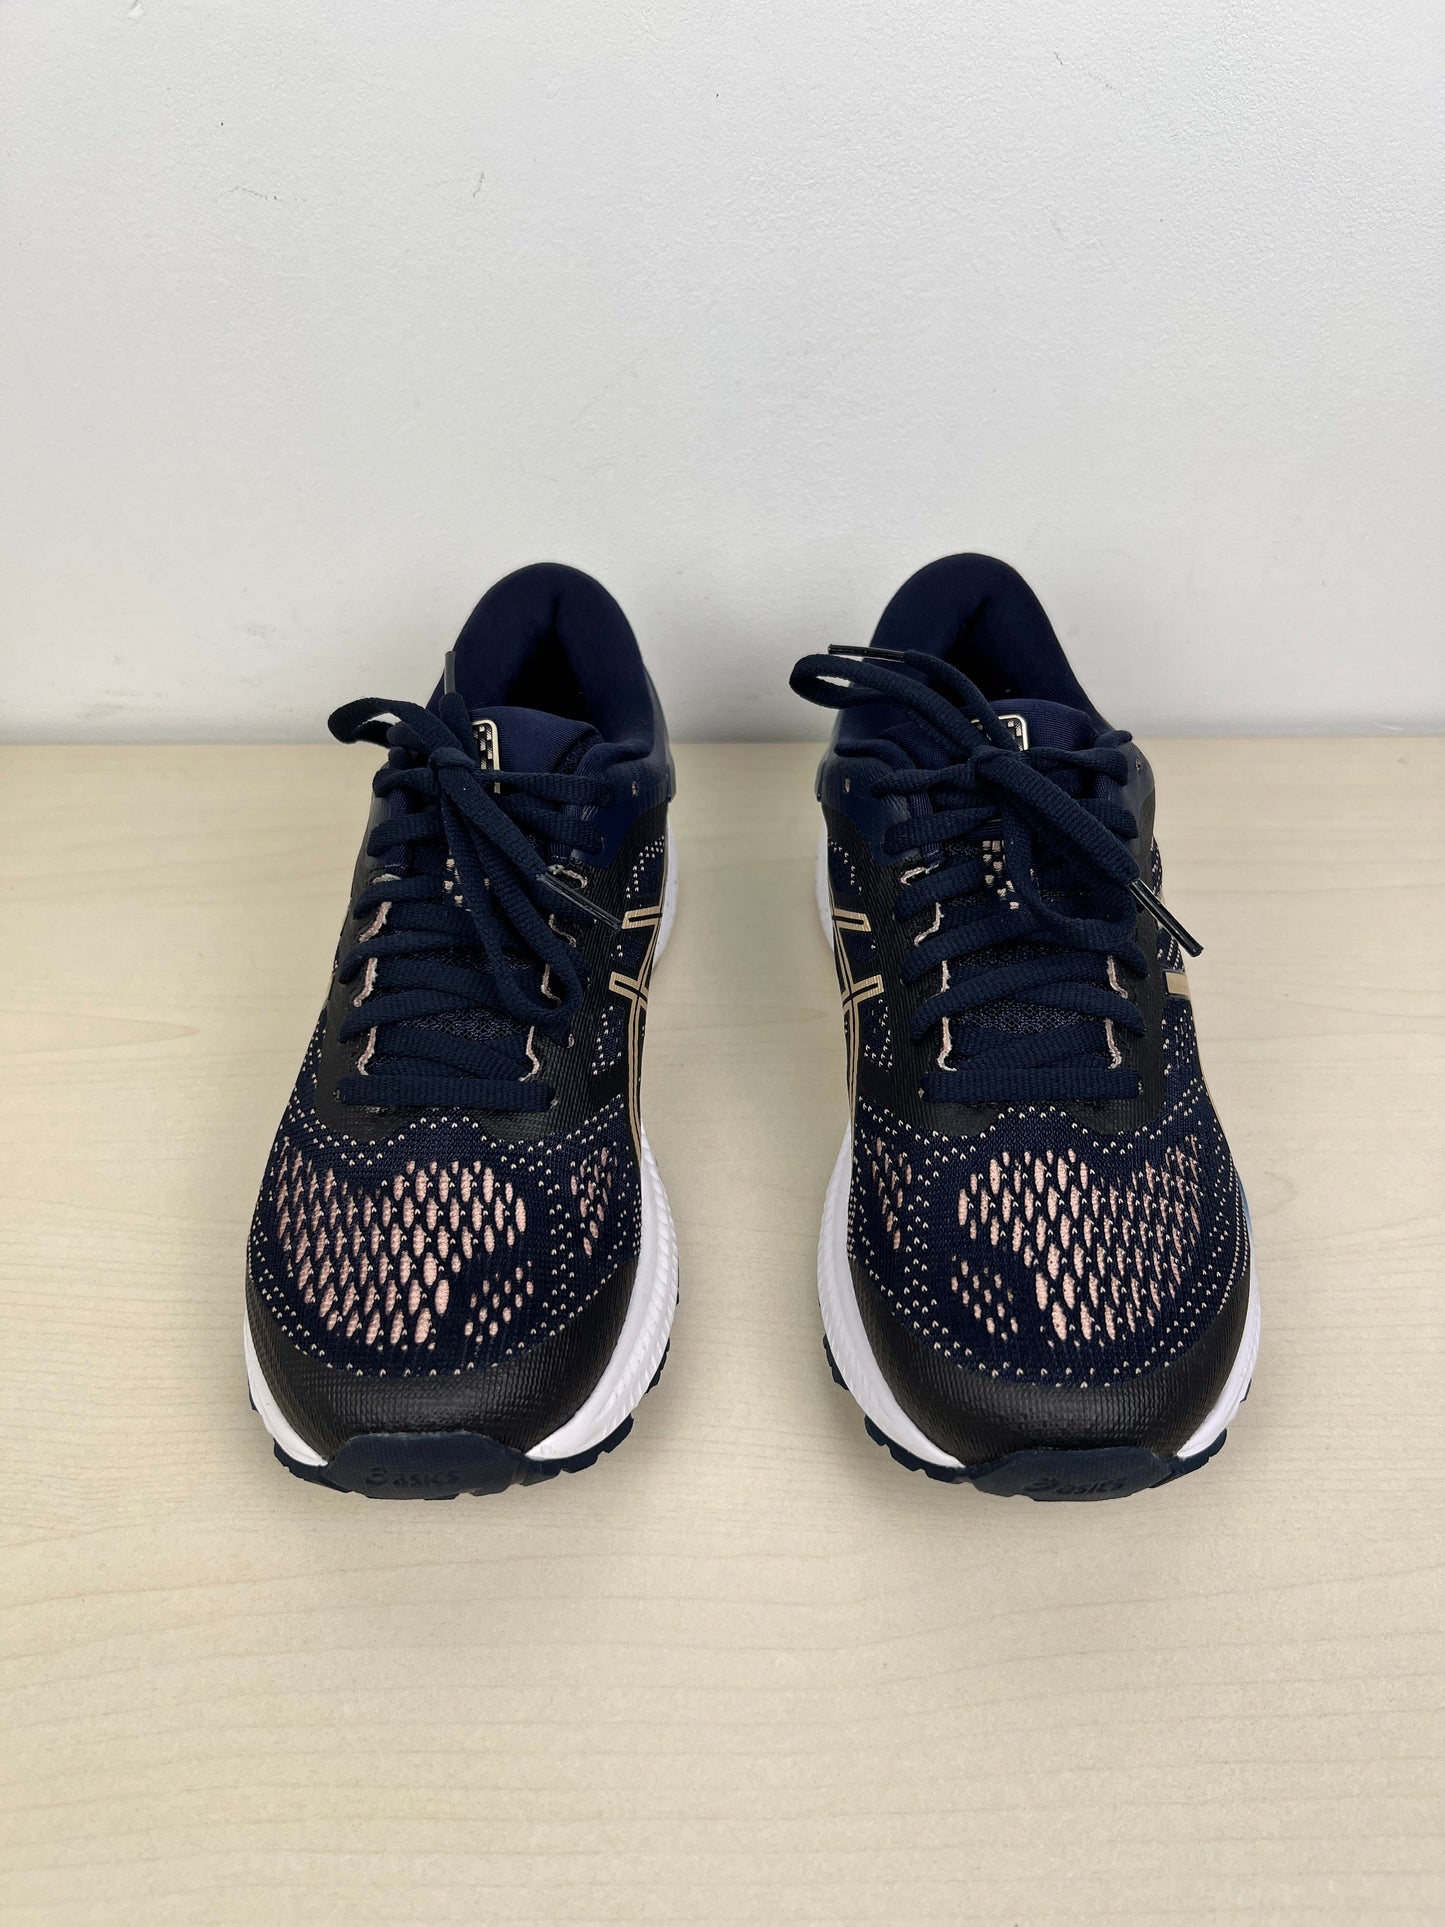 Navy Shoes Athletic Asics, Size 6.5